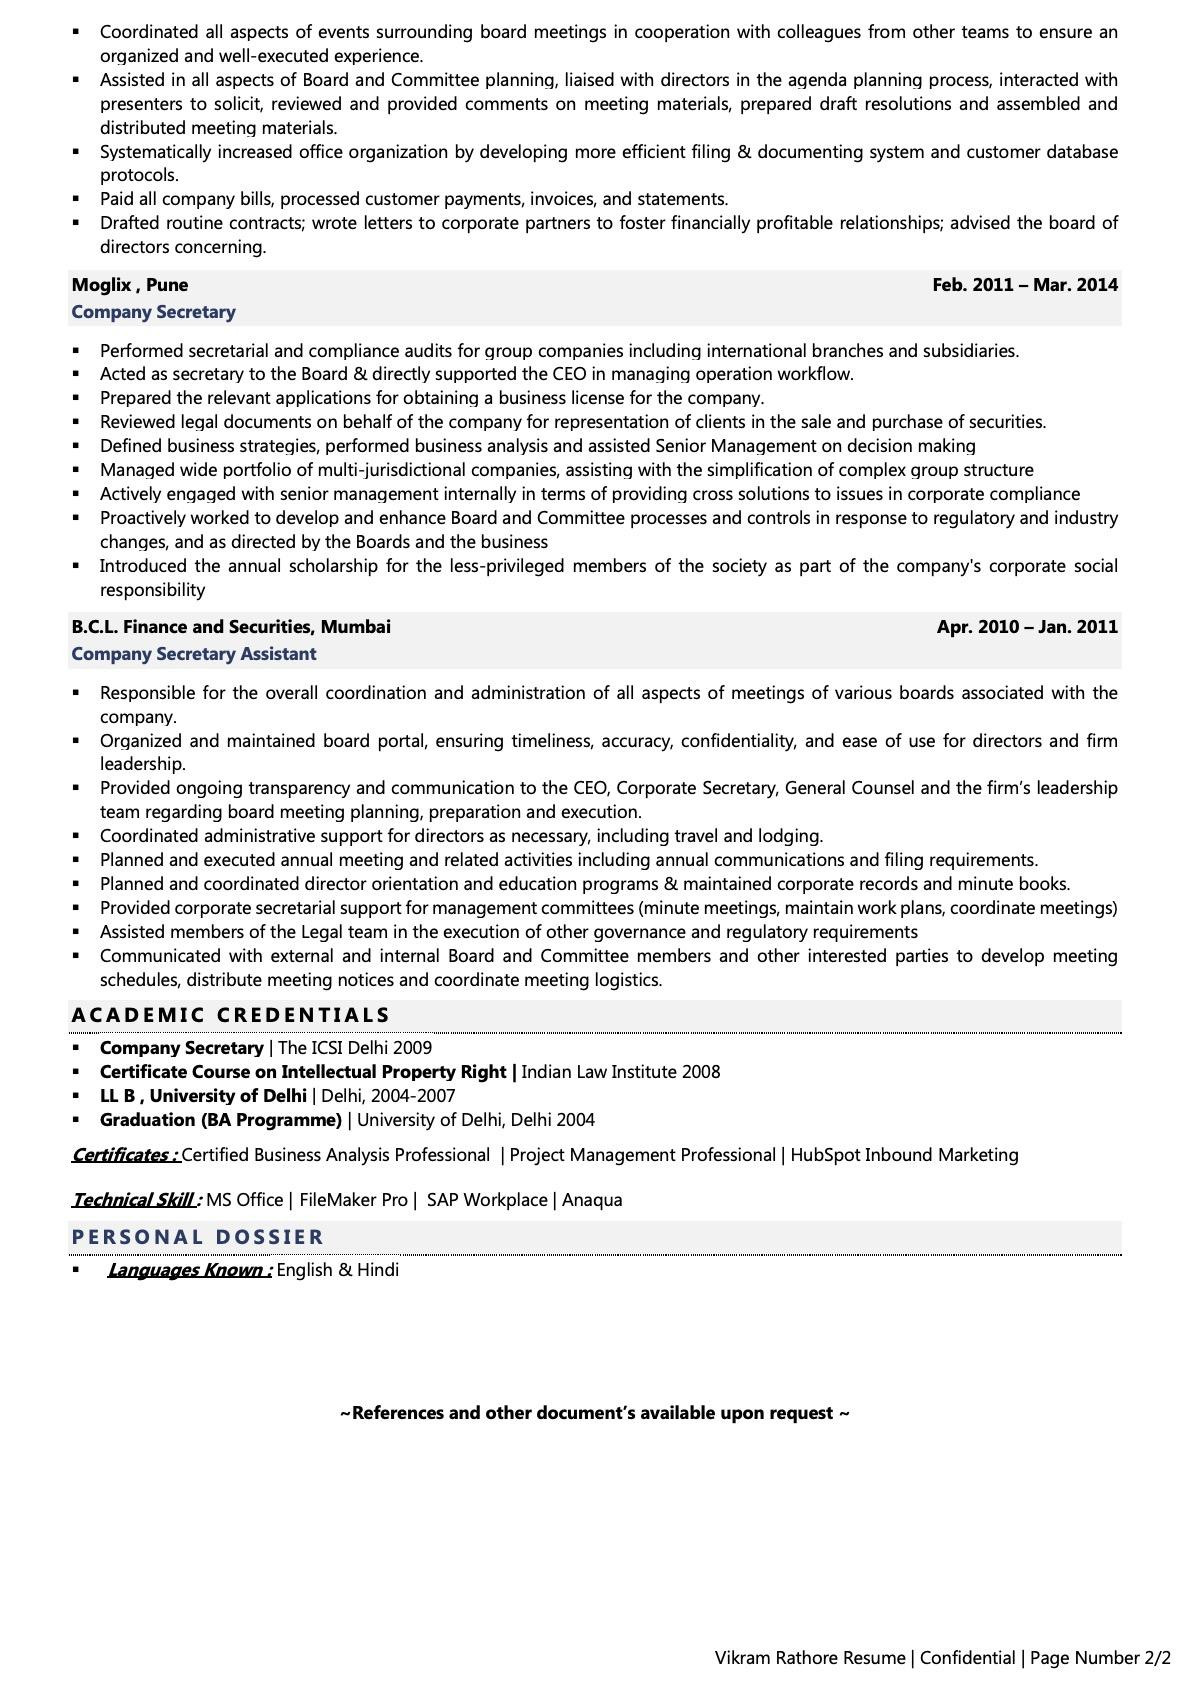 Resume Samples for Company Secretary Students Company Secretary Resume Examples & Template (with Job Winning Tips)